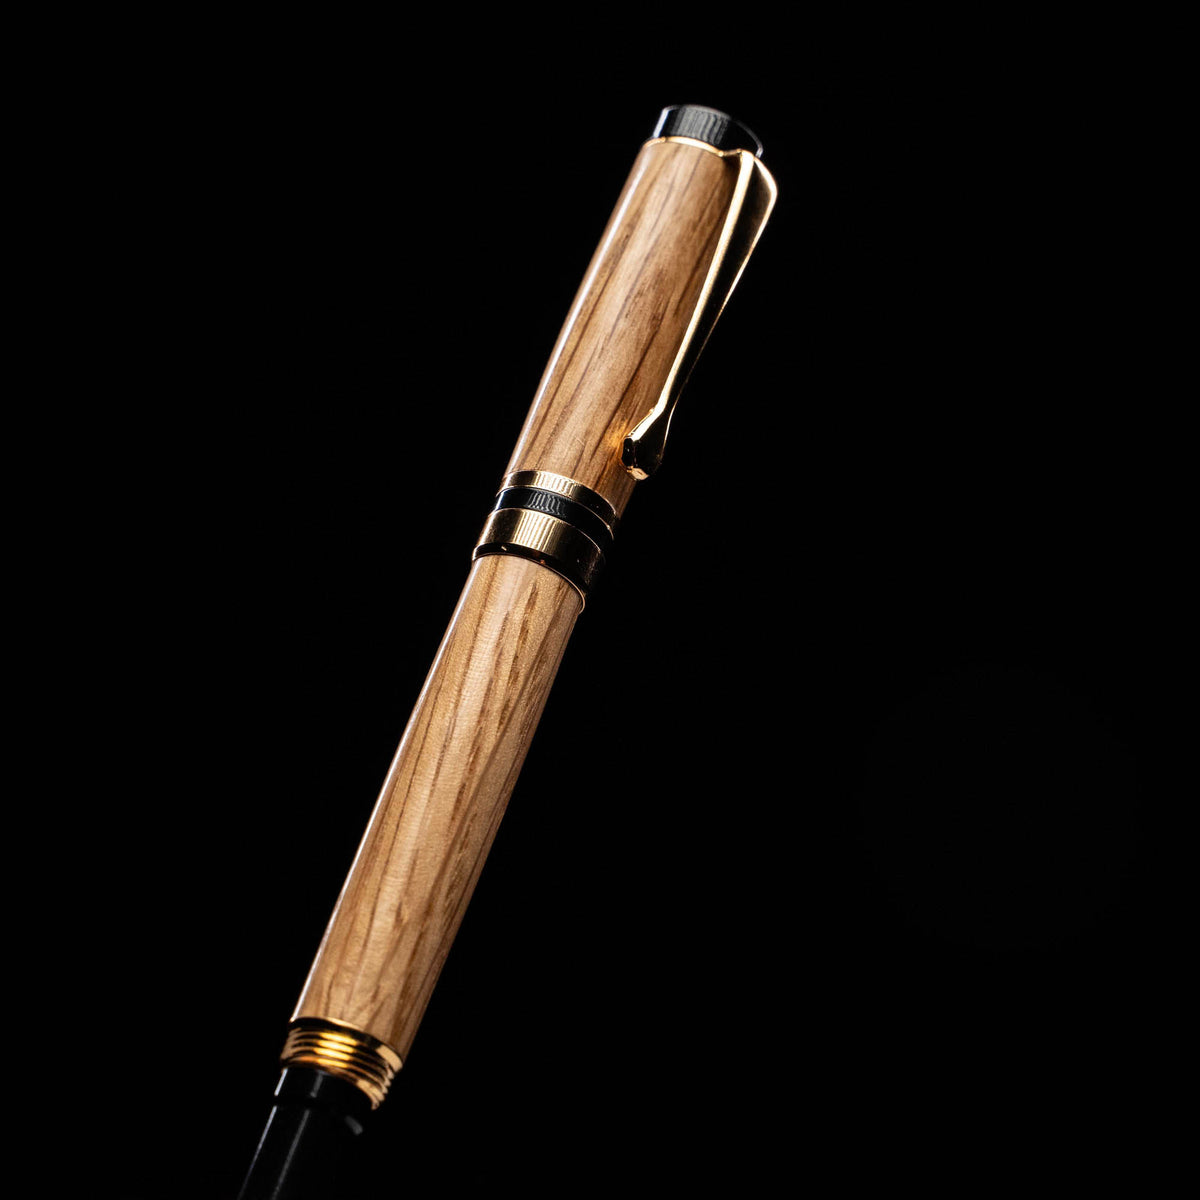 Hand-Turned American Chestnut Rollerball Pen + Fine Leather Pen Sleeve